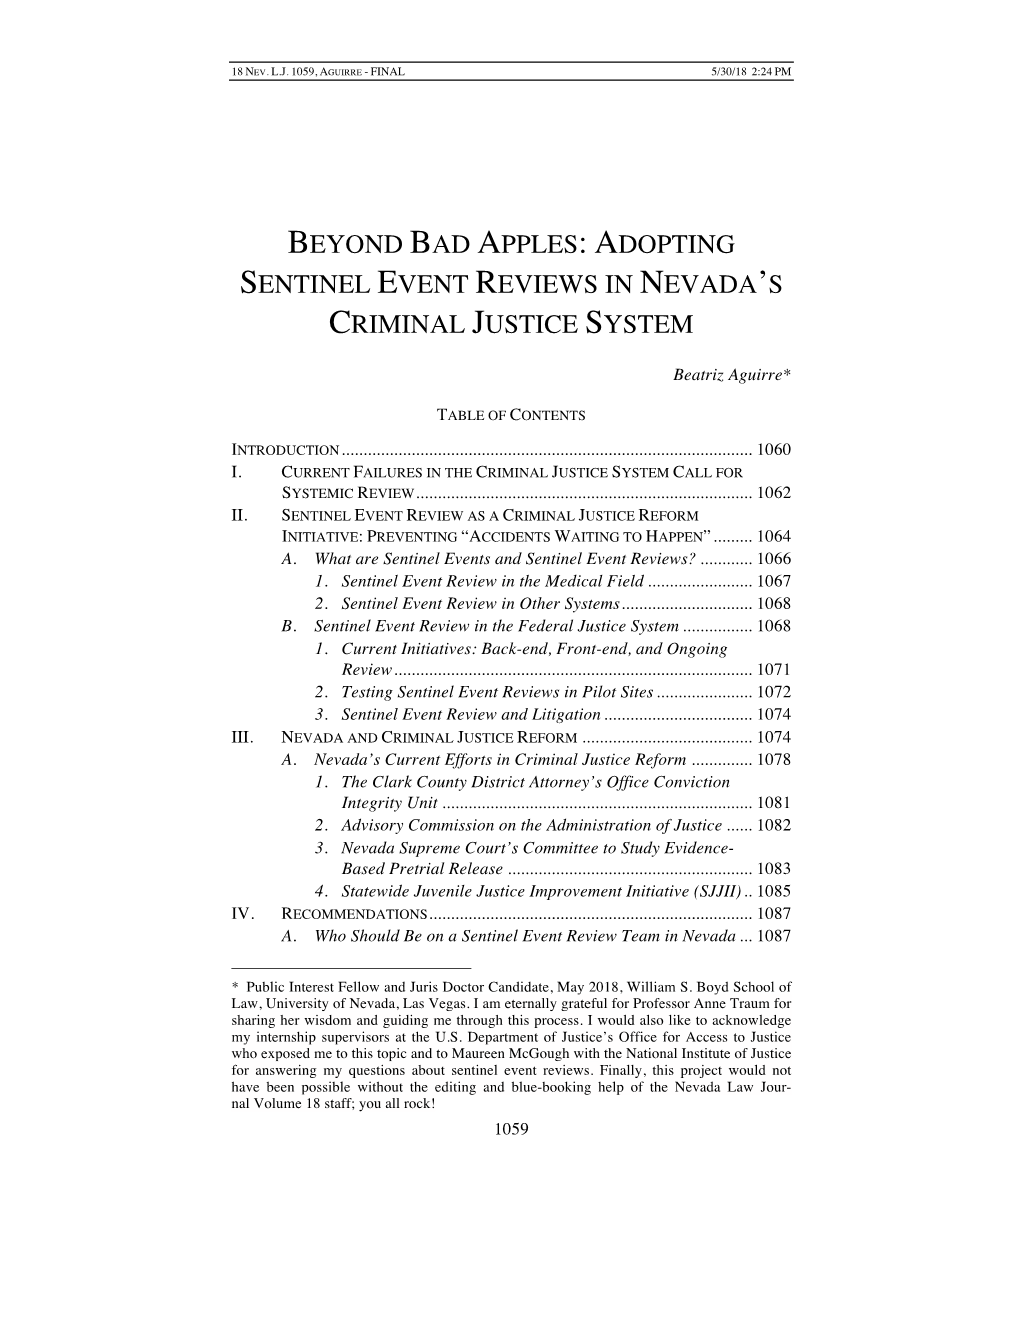 Beyond Bad Apples: Adopting Sentinel Event Reviews in Nevada’S Criminal Justice System